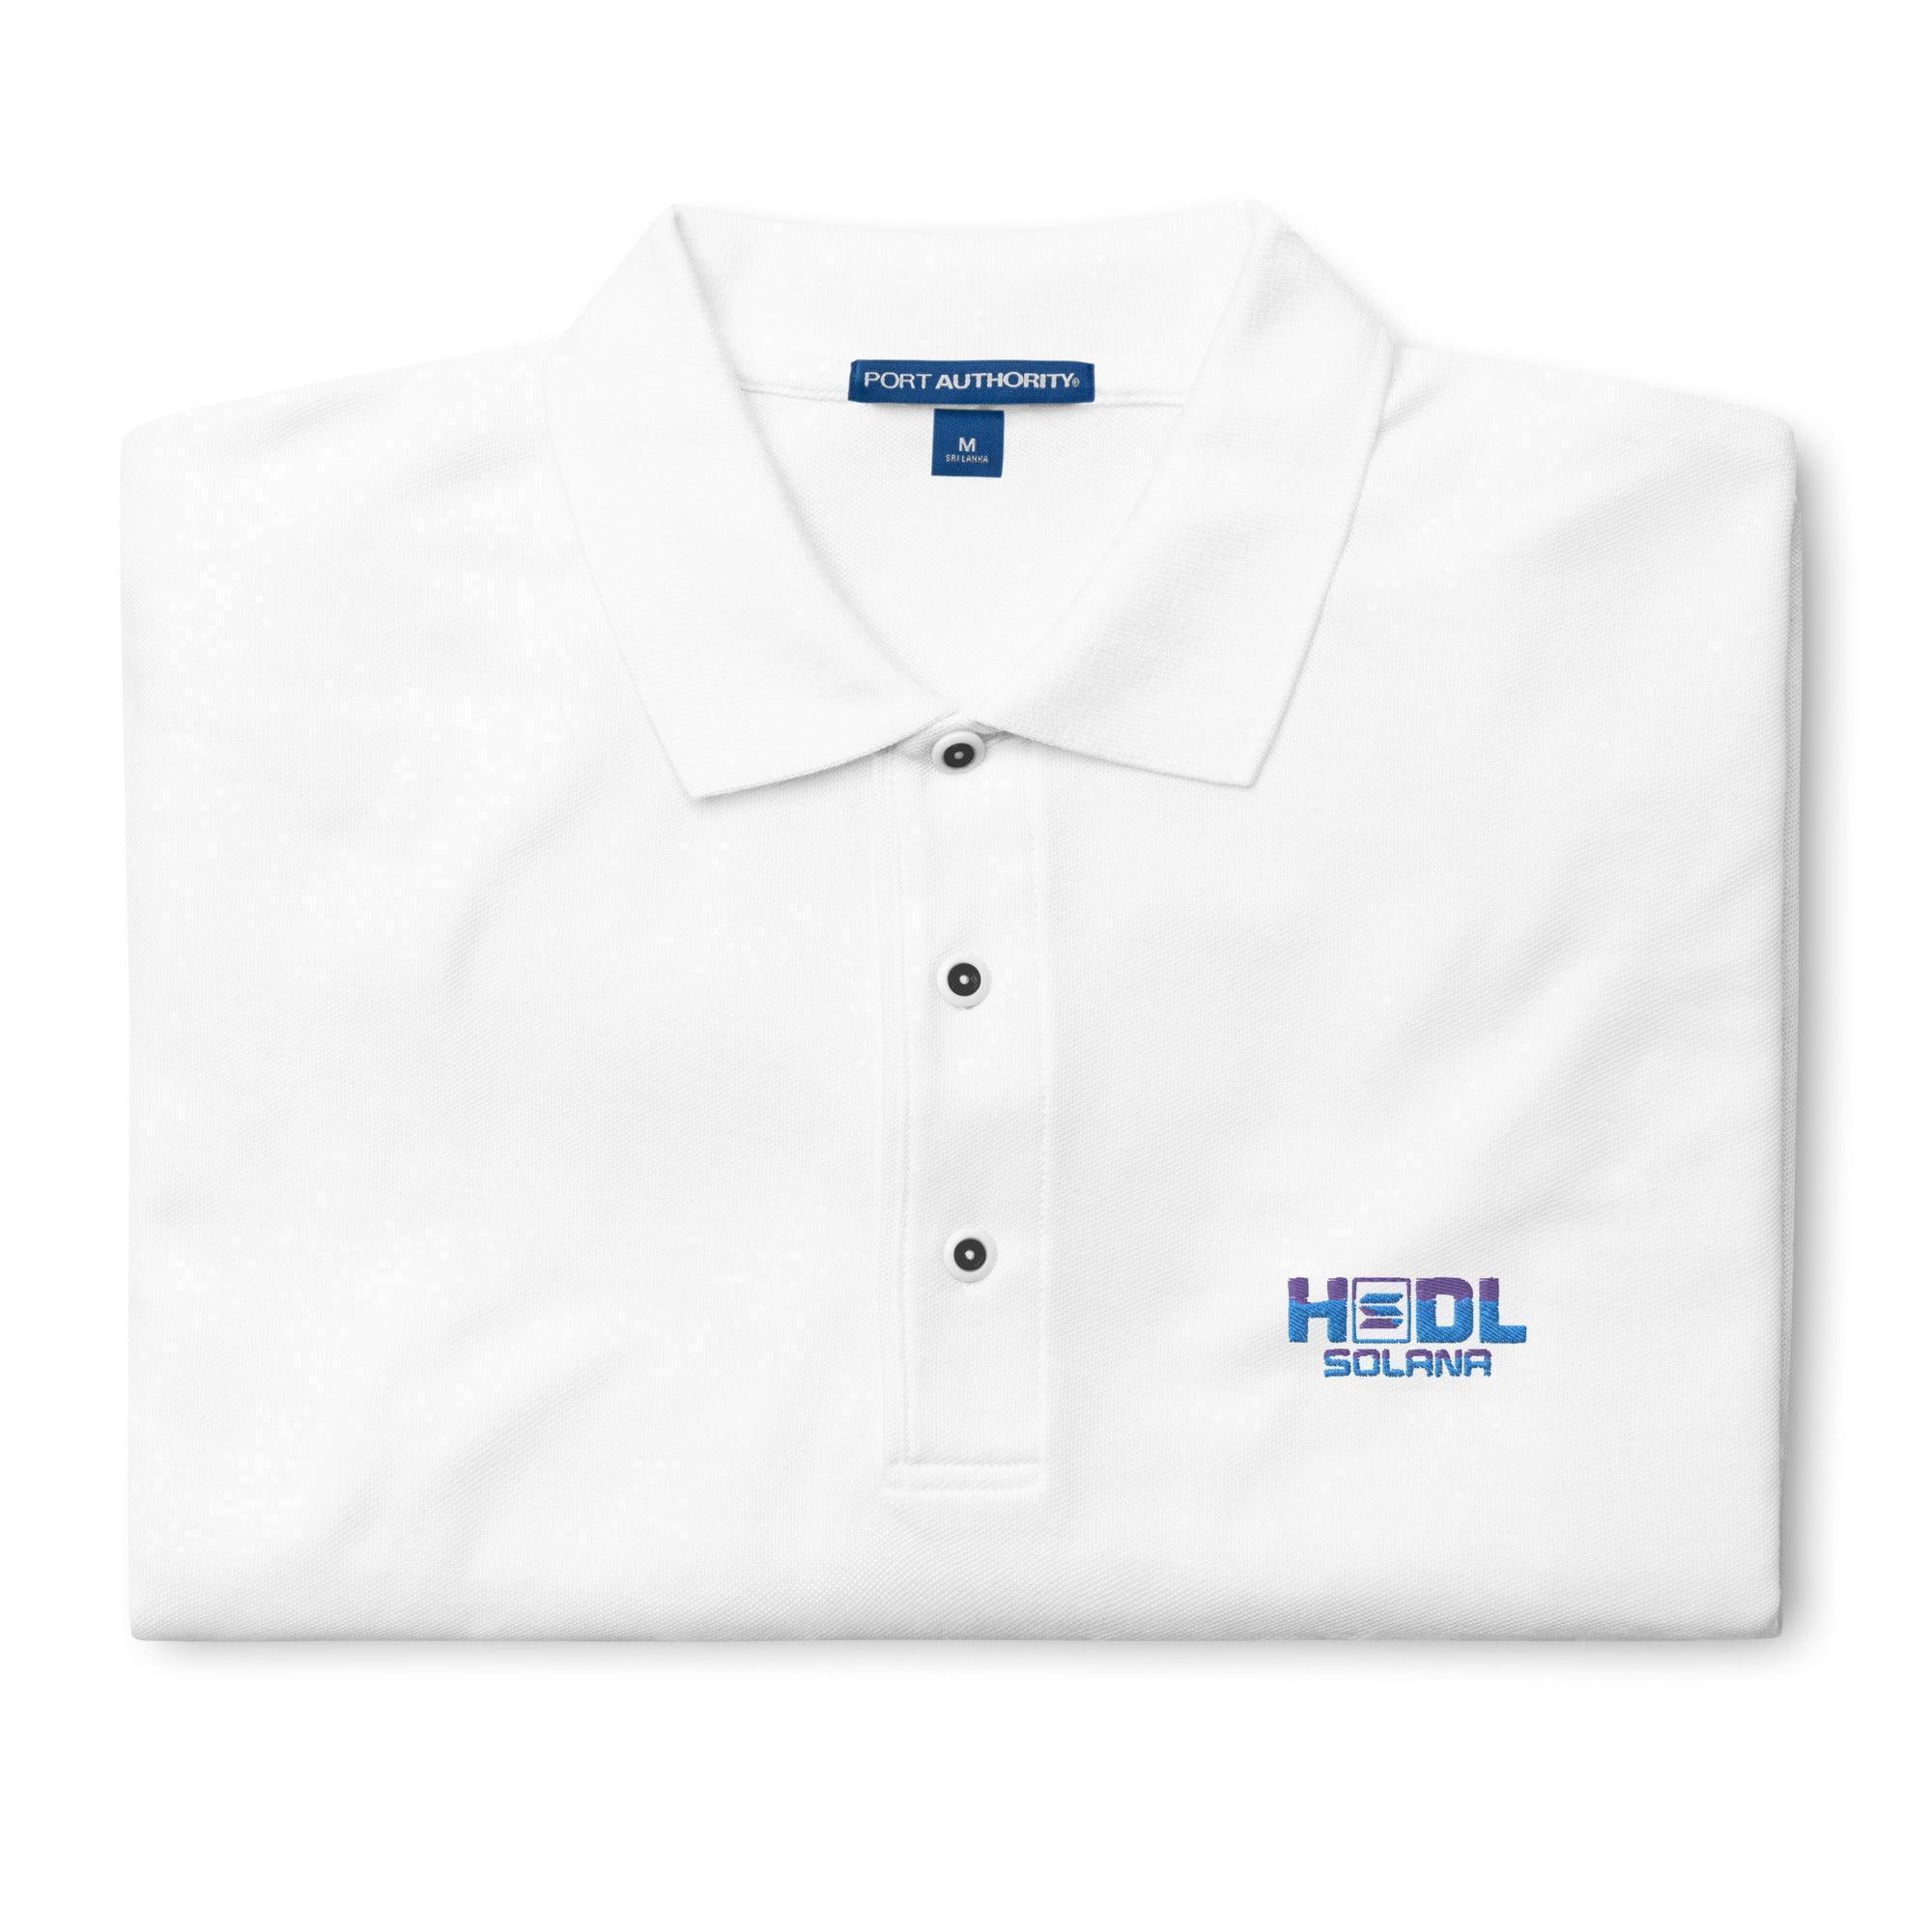 Solana HODL Polo Shirt - InvestmenTees